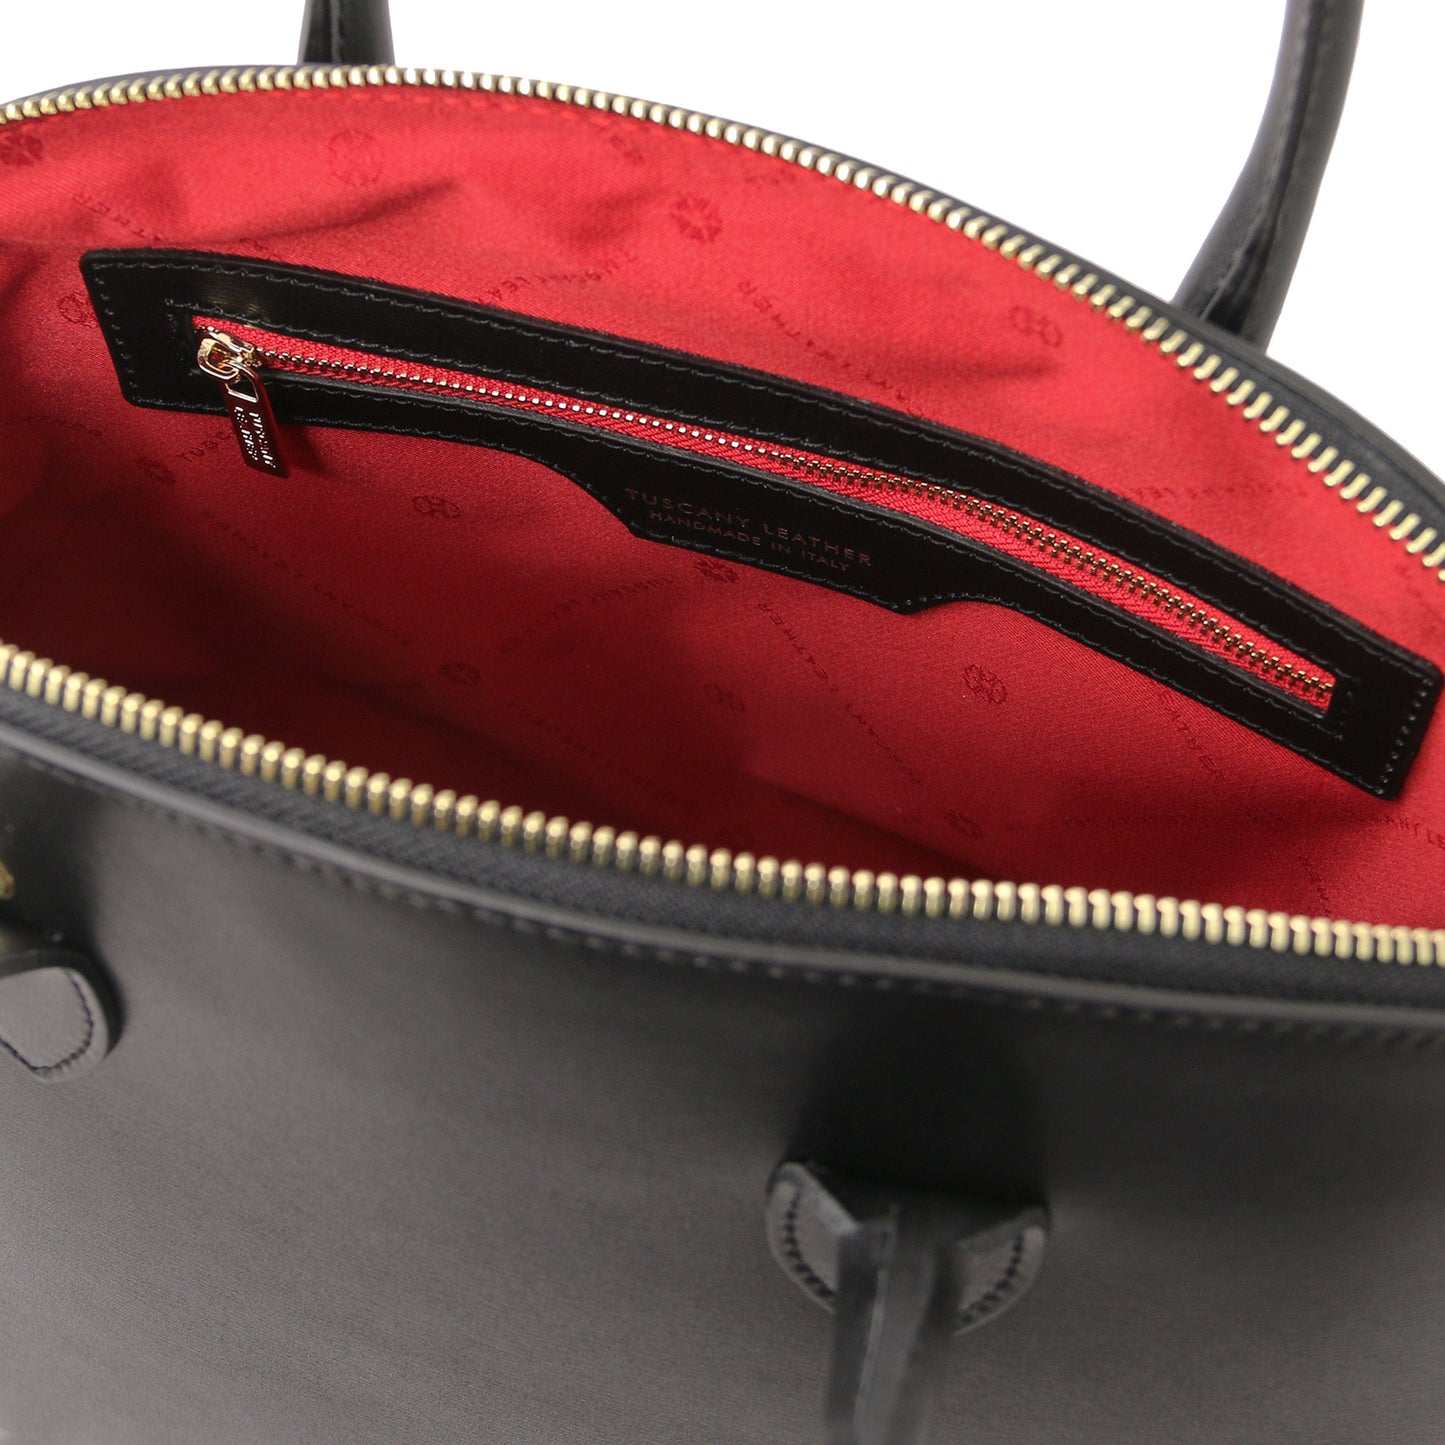 TL KeyLuck - Italian leather tote | TL142212 - Premium Leather handbags - Shop now at San Rocco Italia